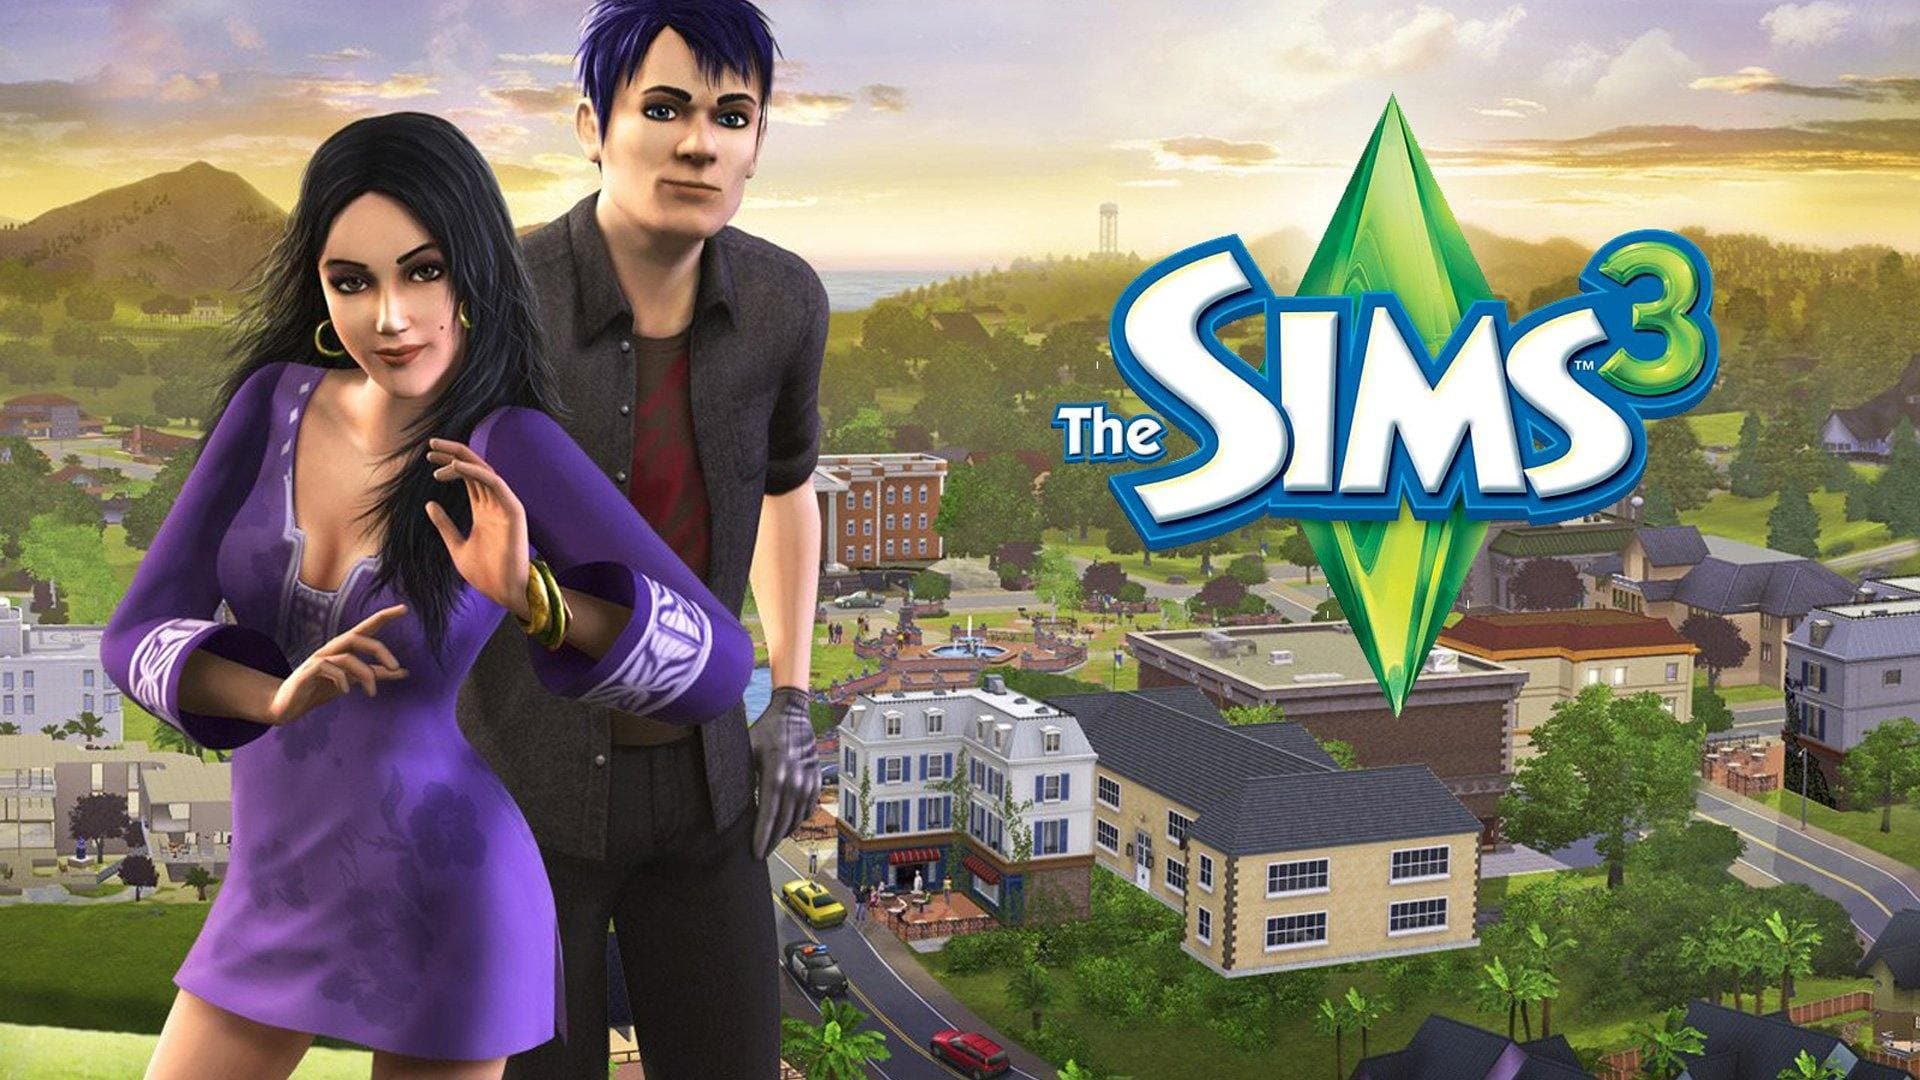 The Sims 3 | סימס 3 למחשב - EXON גיימס משחקים ותוכנות למחשב ולאקס בוקס!